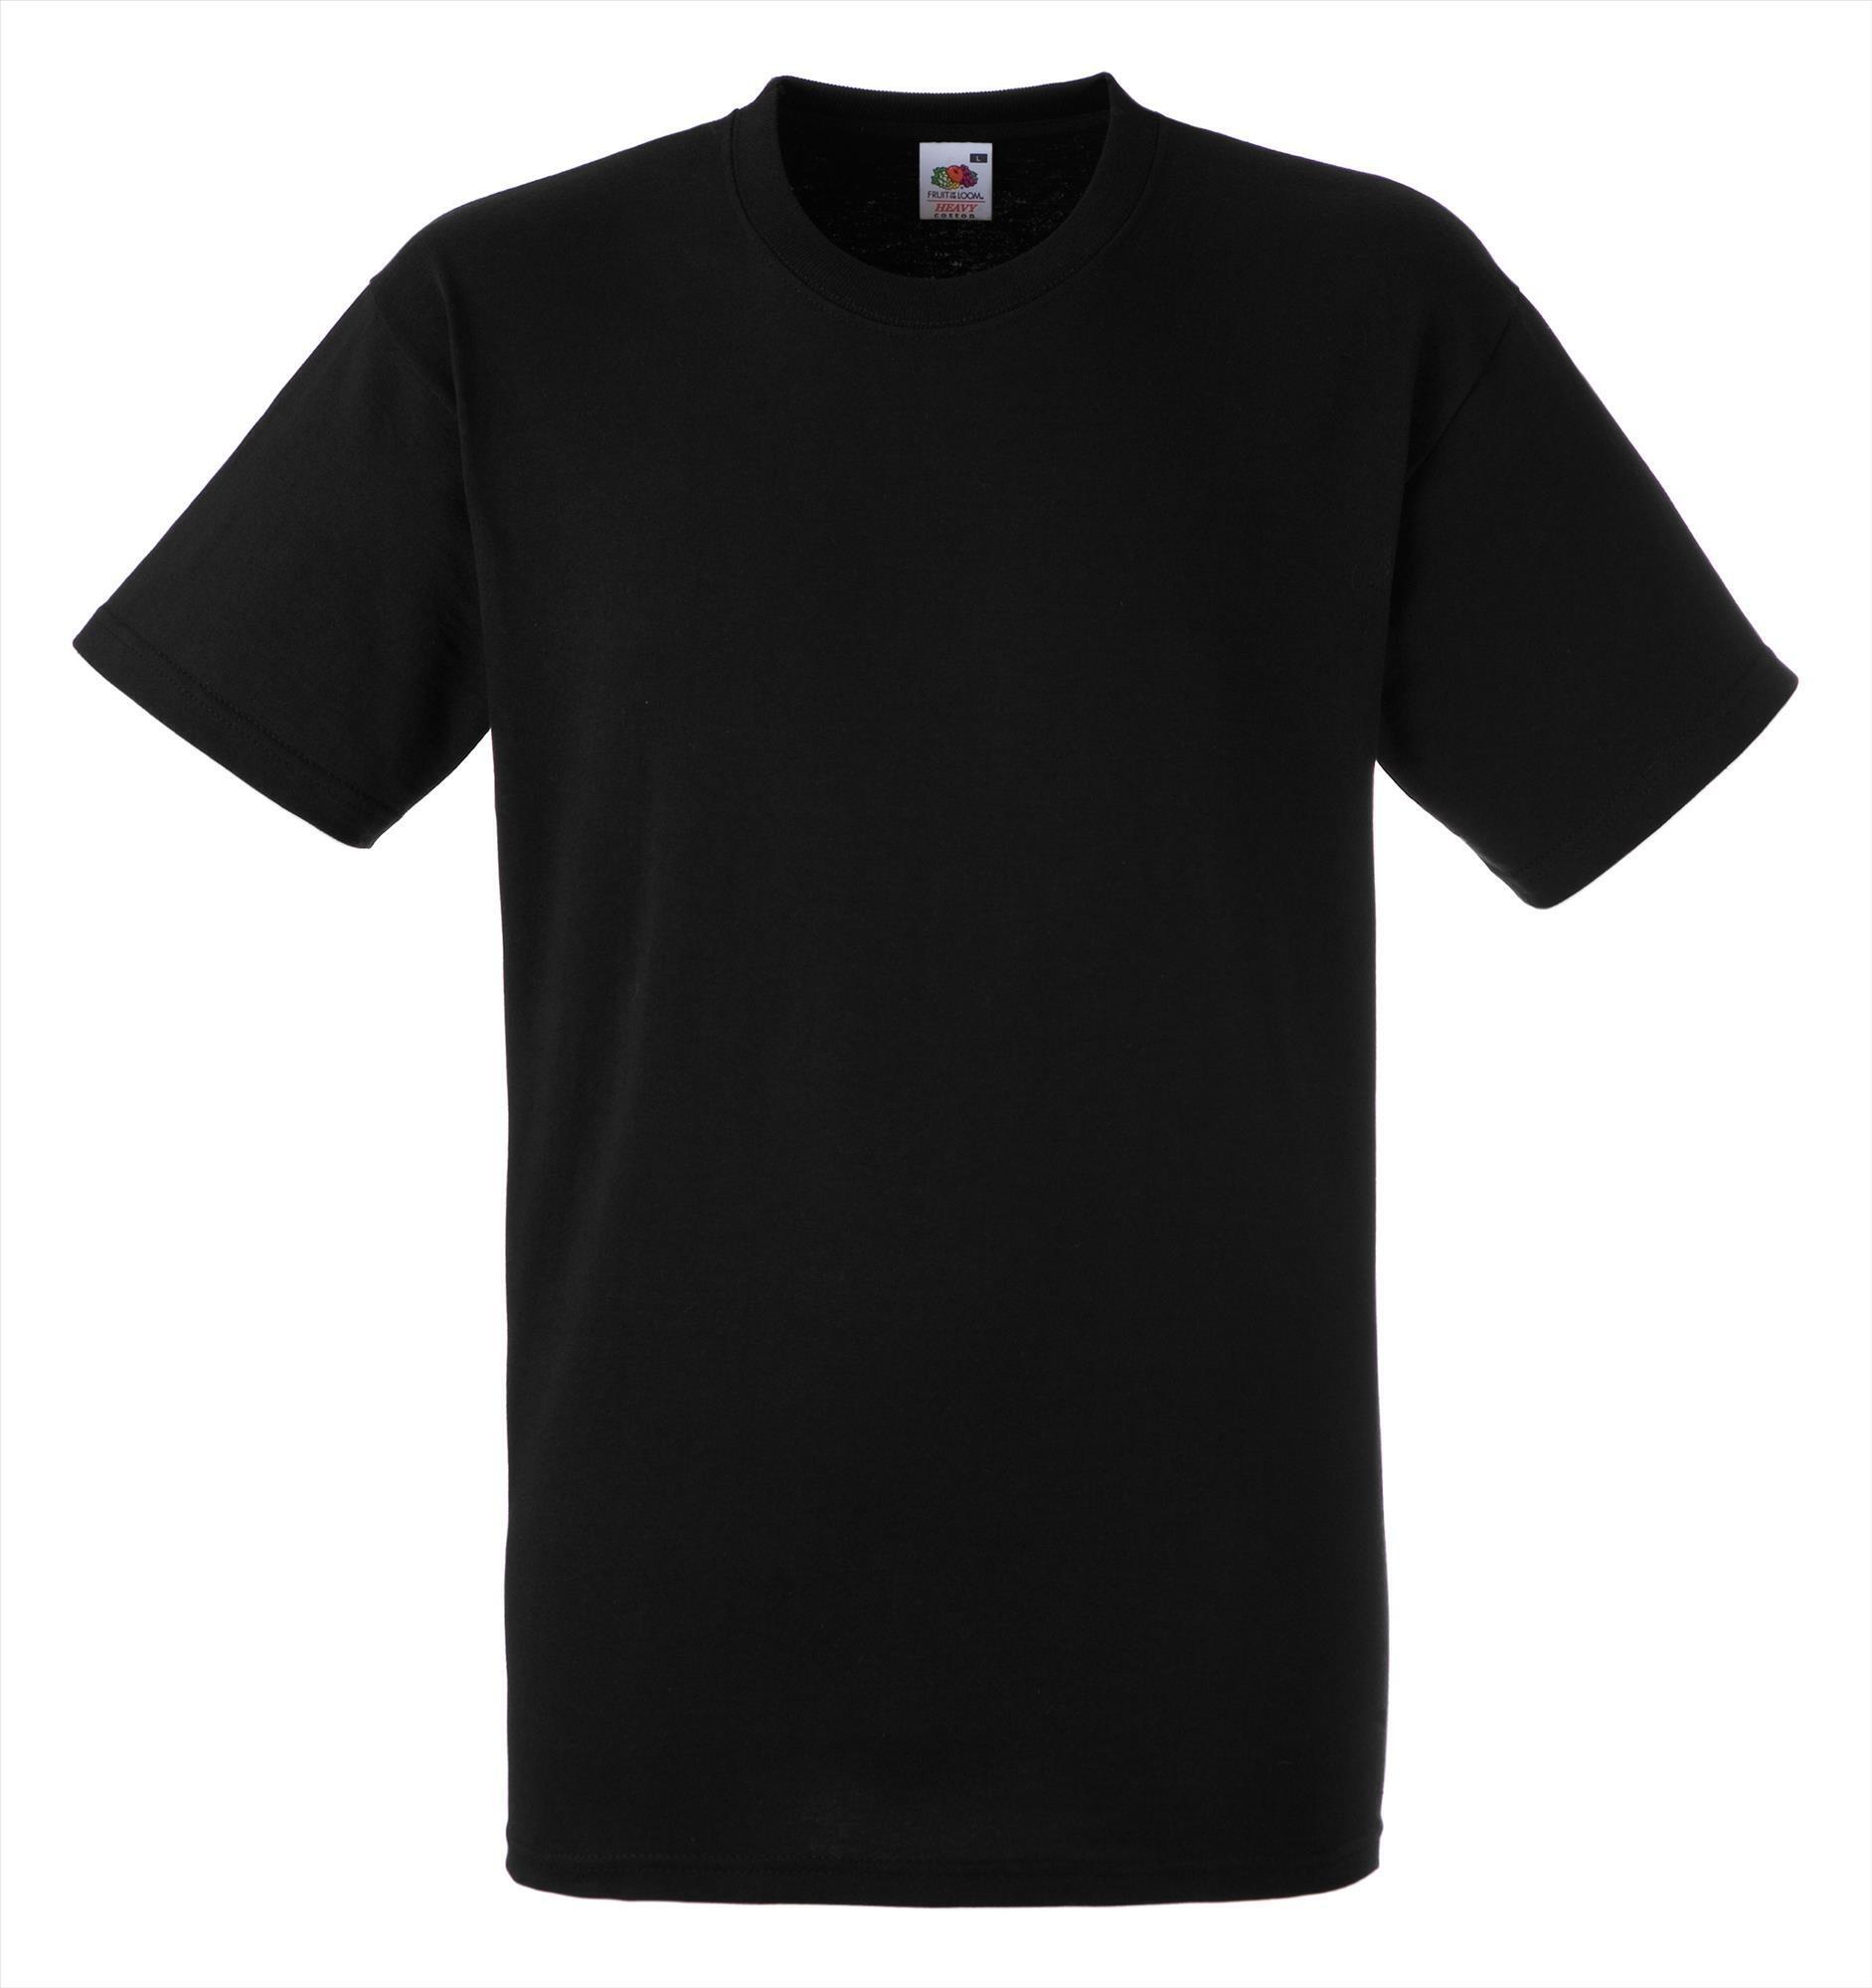 T-shirt unisex zwart lekker dik personaliseren je eigen opdruk prima werk T-shirt